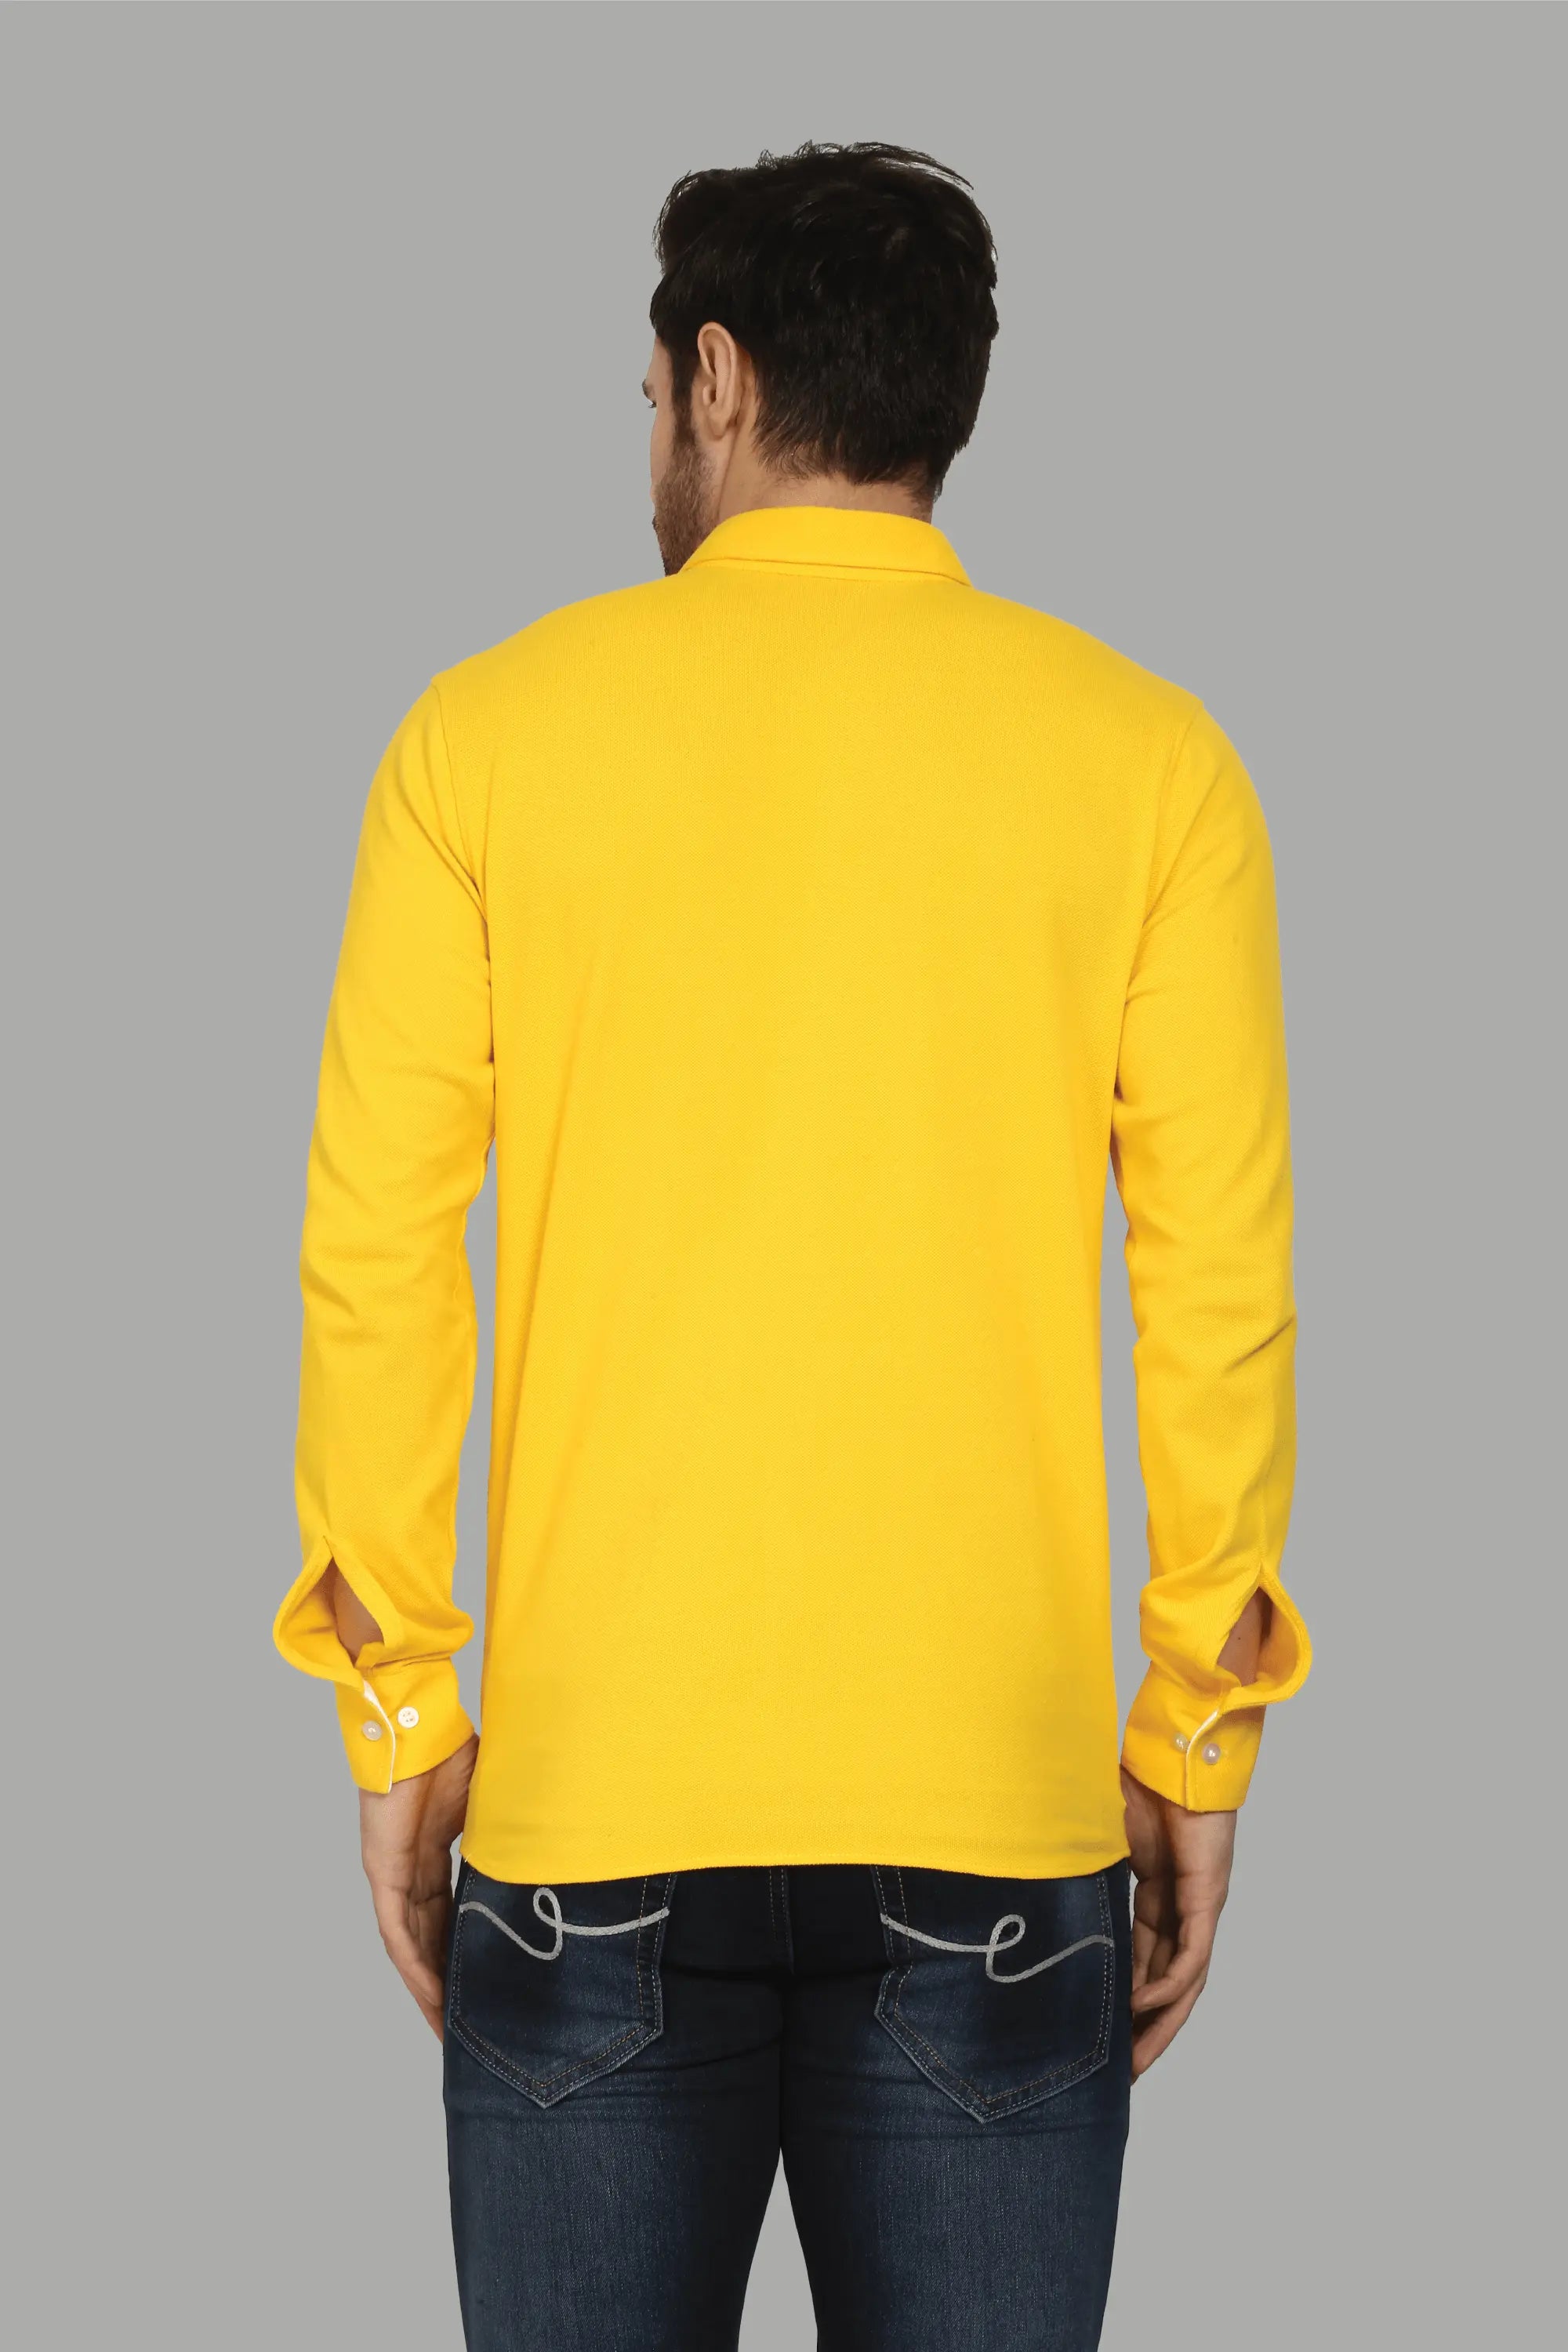 Urban Revivo denim jacket in light yellow | ASOS